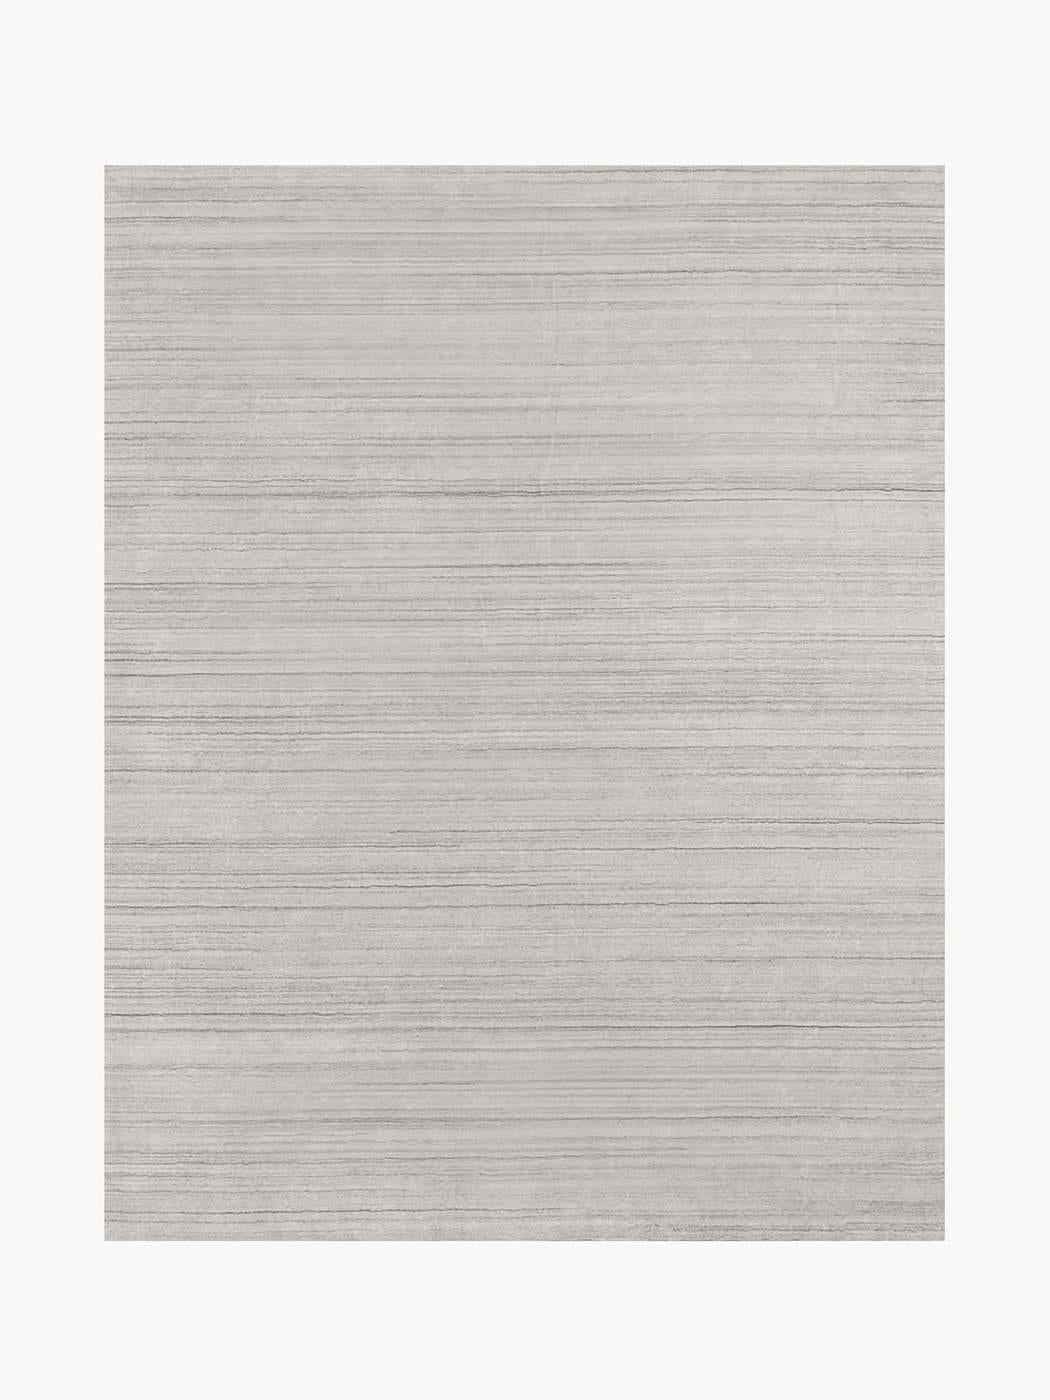 For Sale: Beige (Performance Savilla Sand) Ben Soleimani Performance Savilla Rug– Hand-knotted Medium Pile White 9'x12'